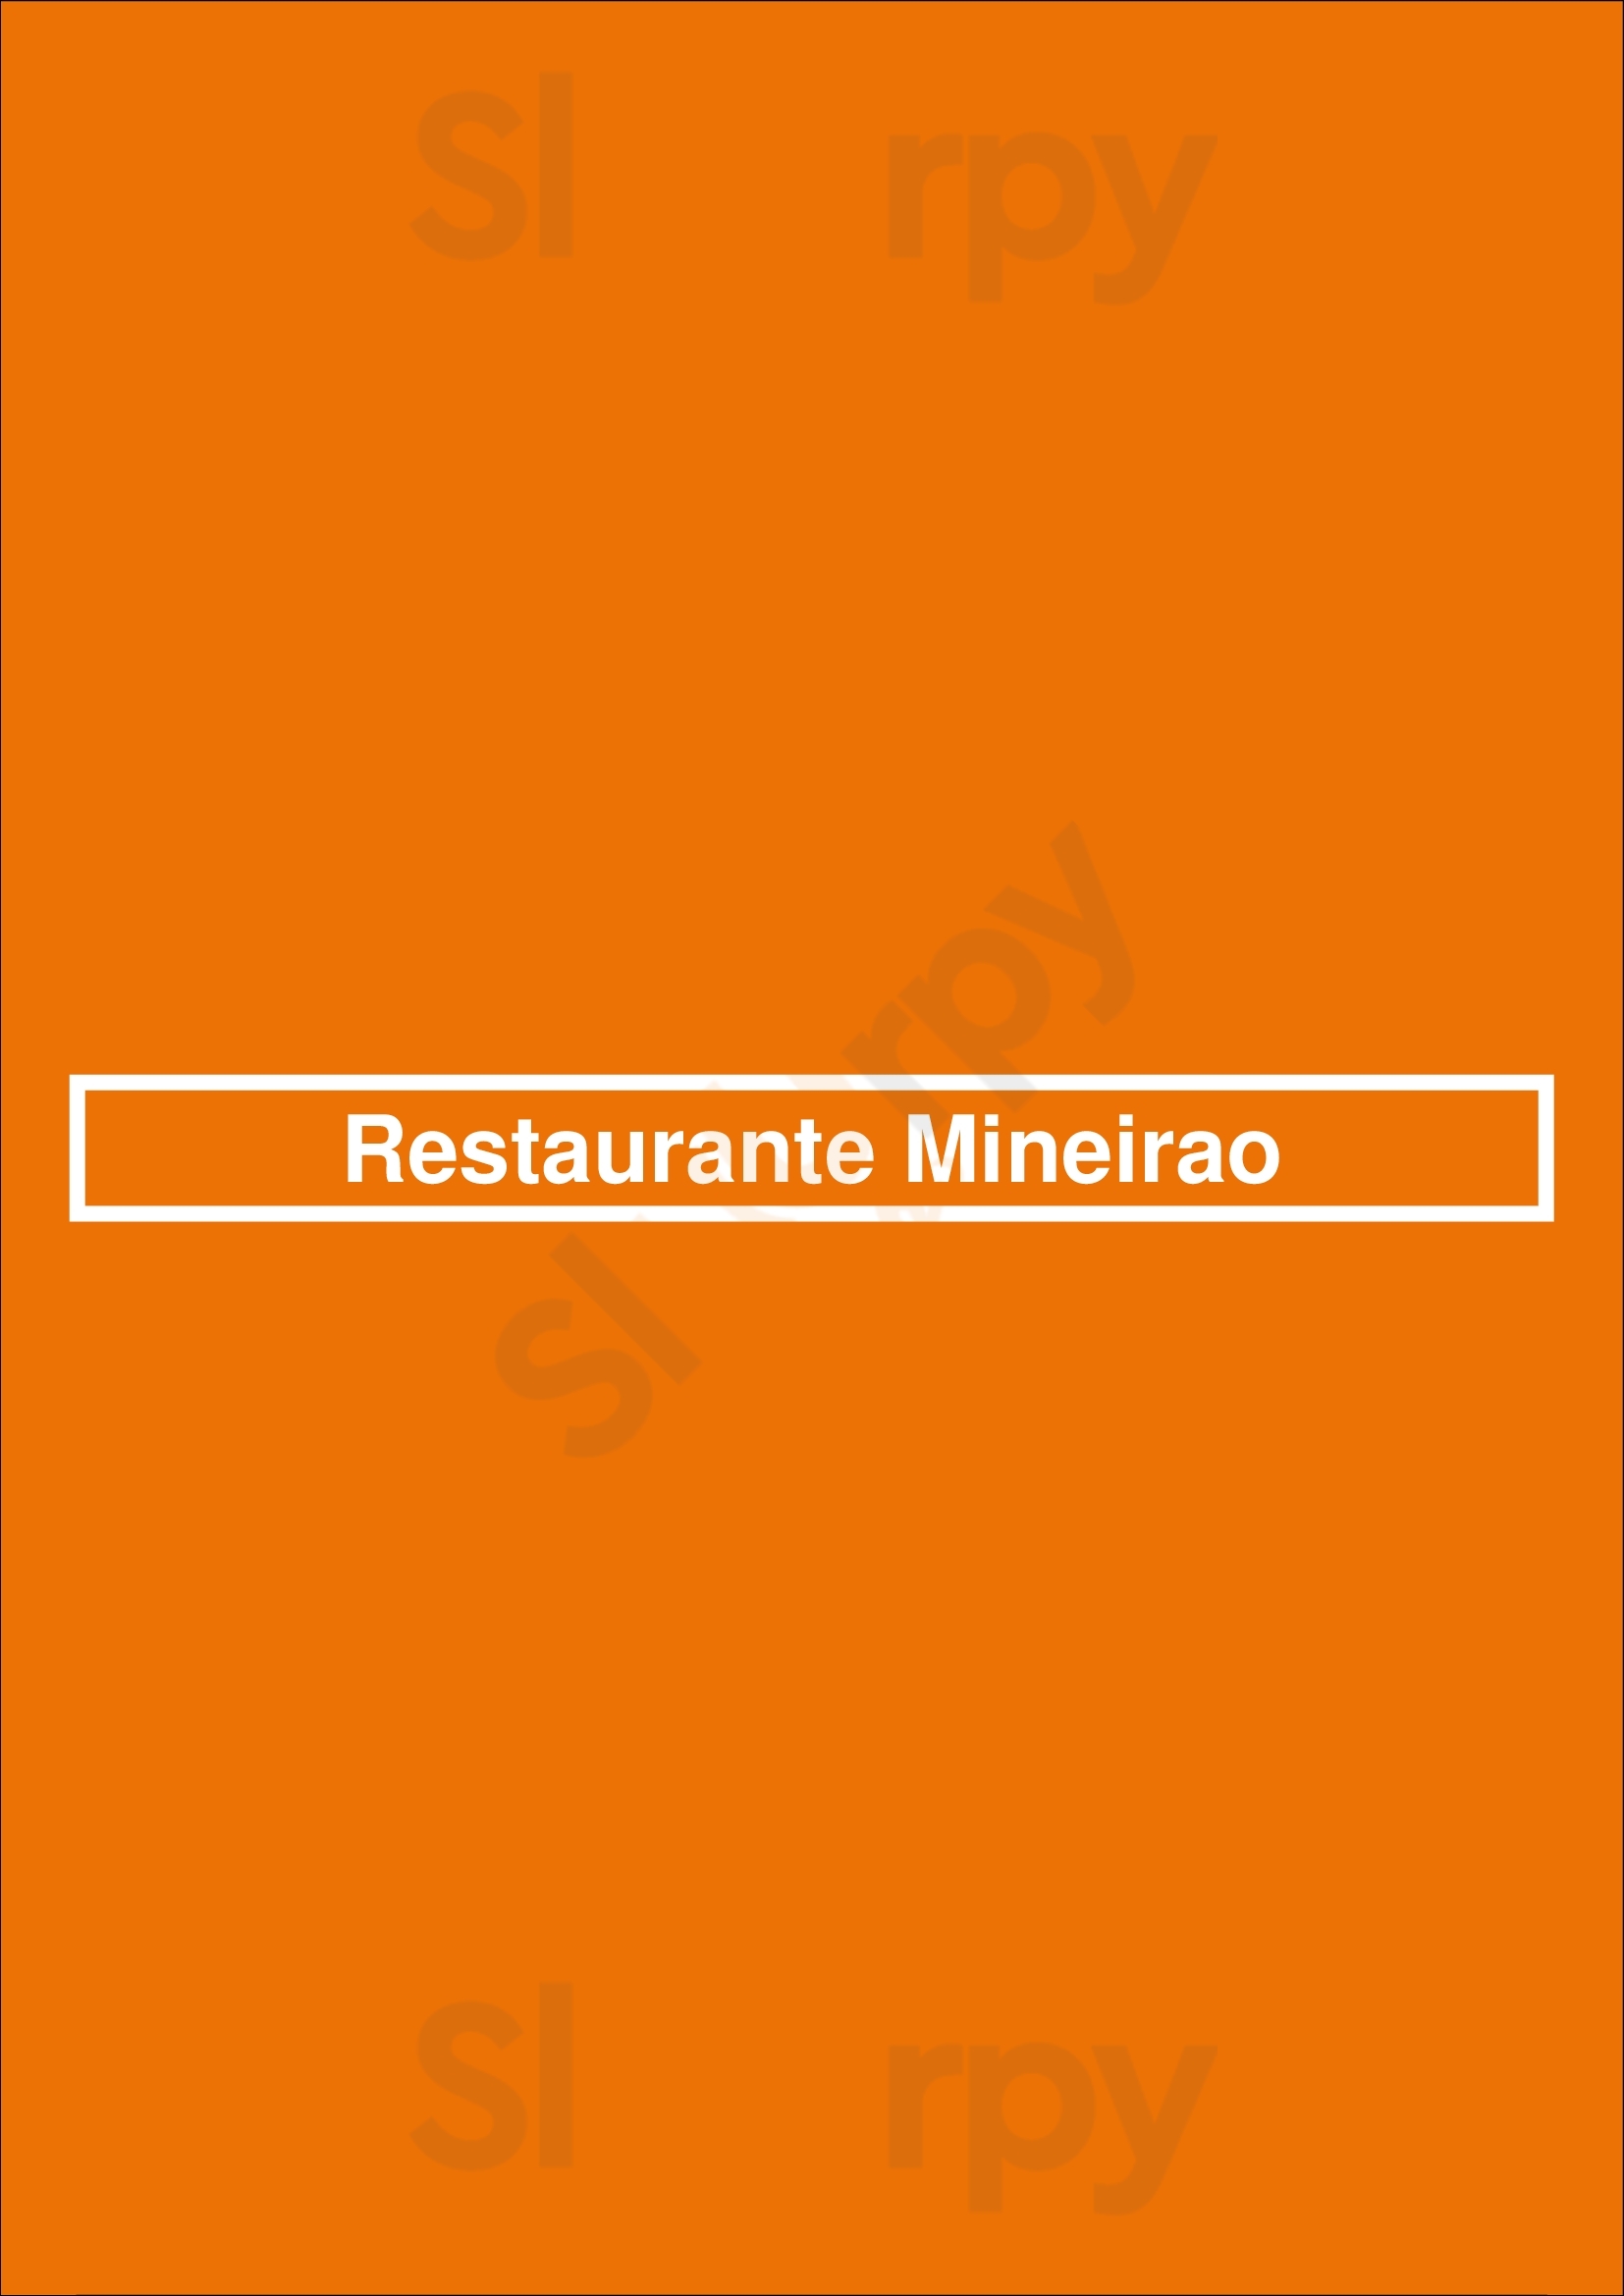 Restaurante Mineirao Porto Menu - 1